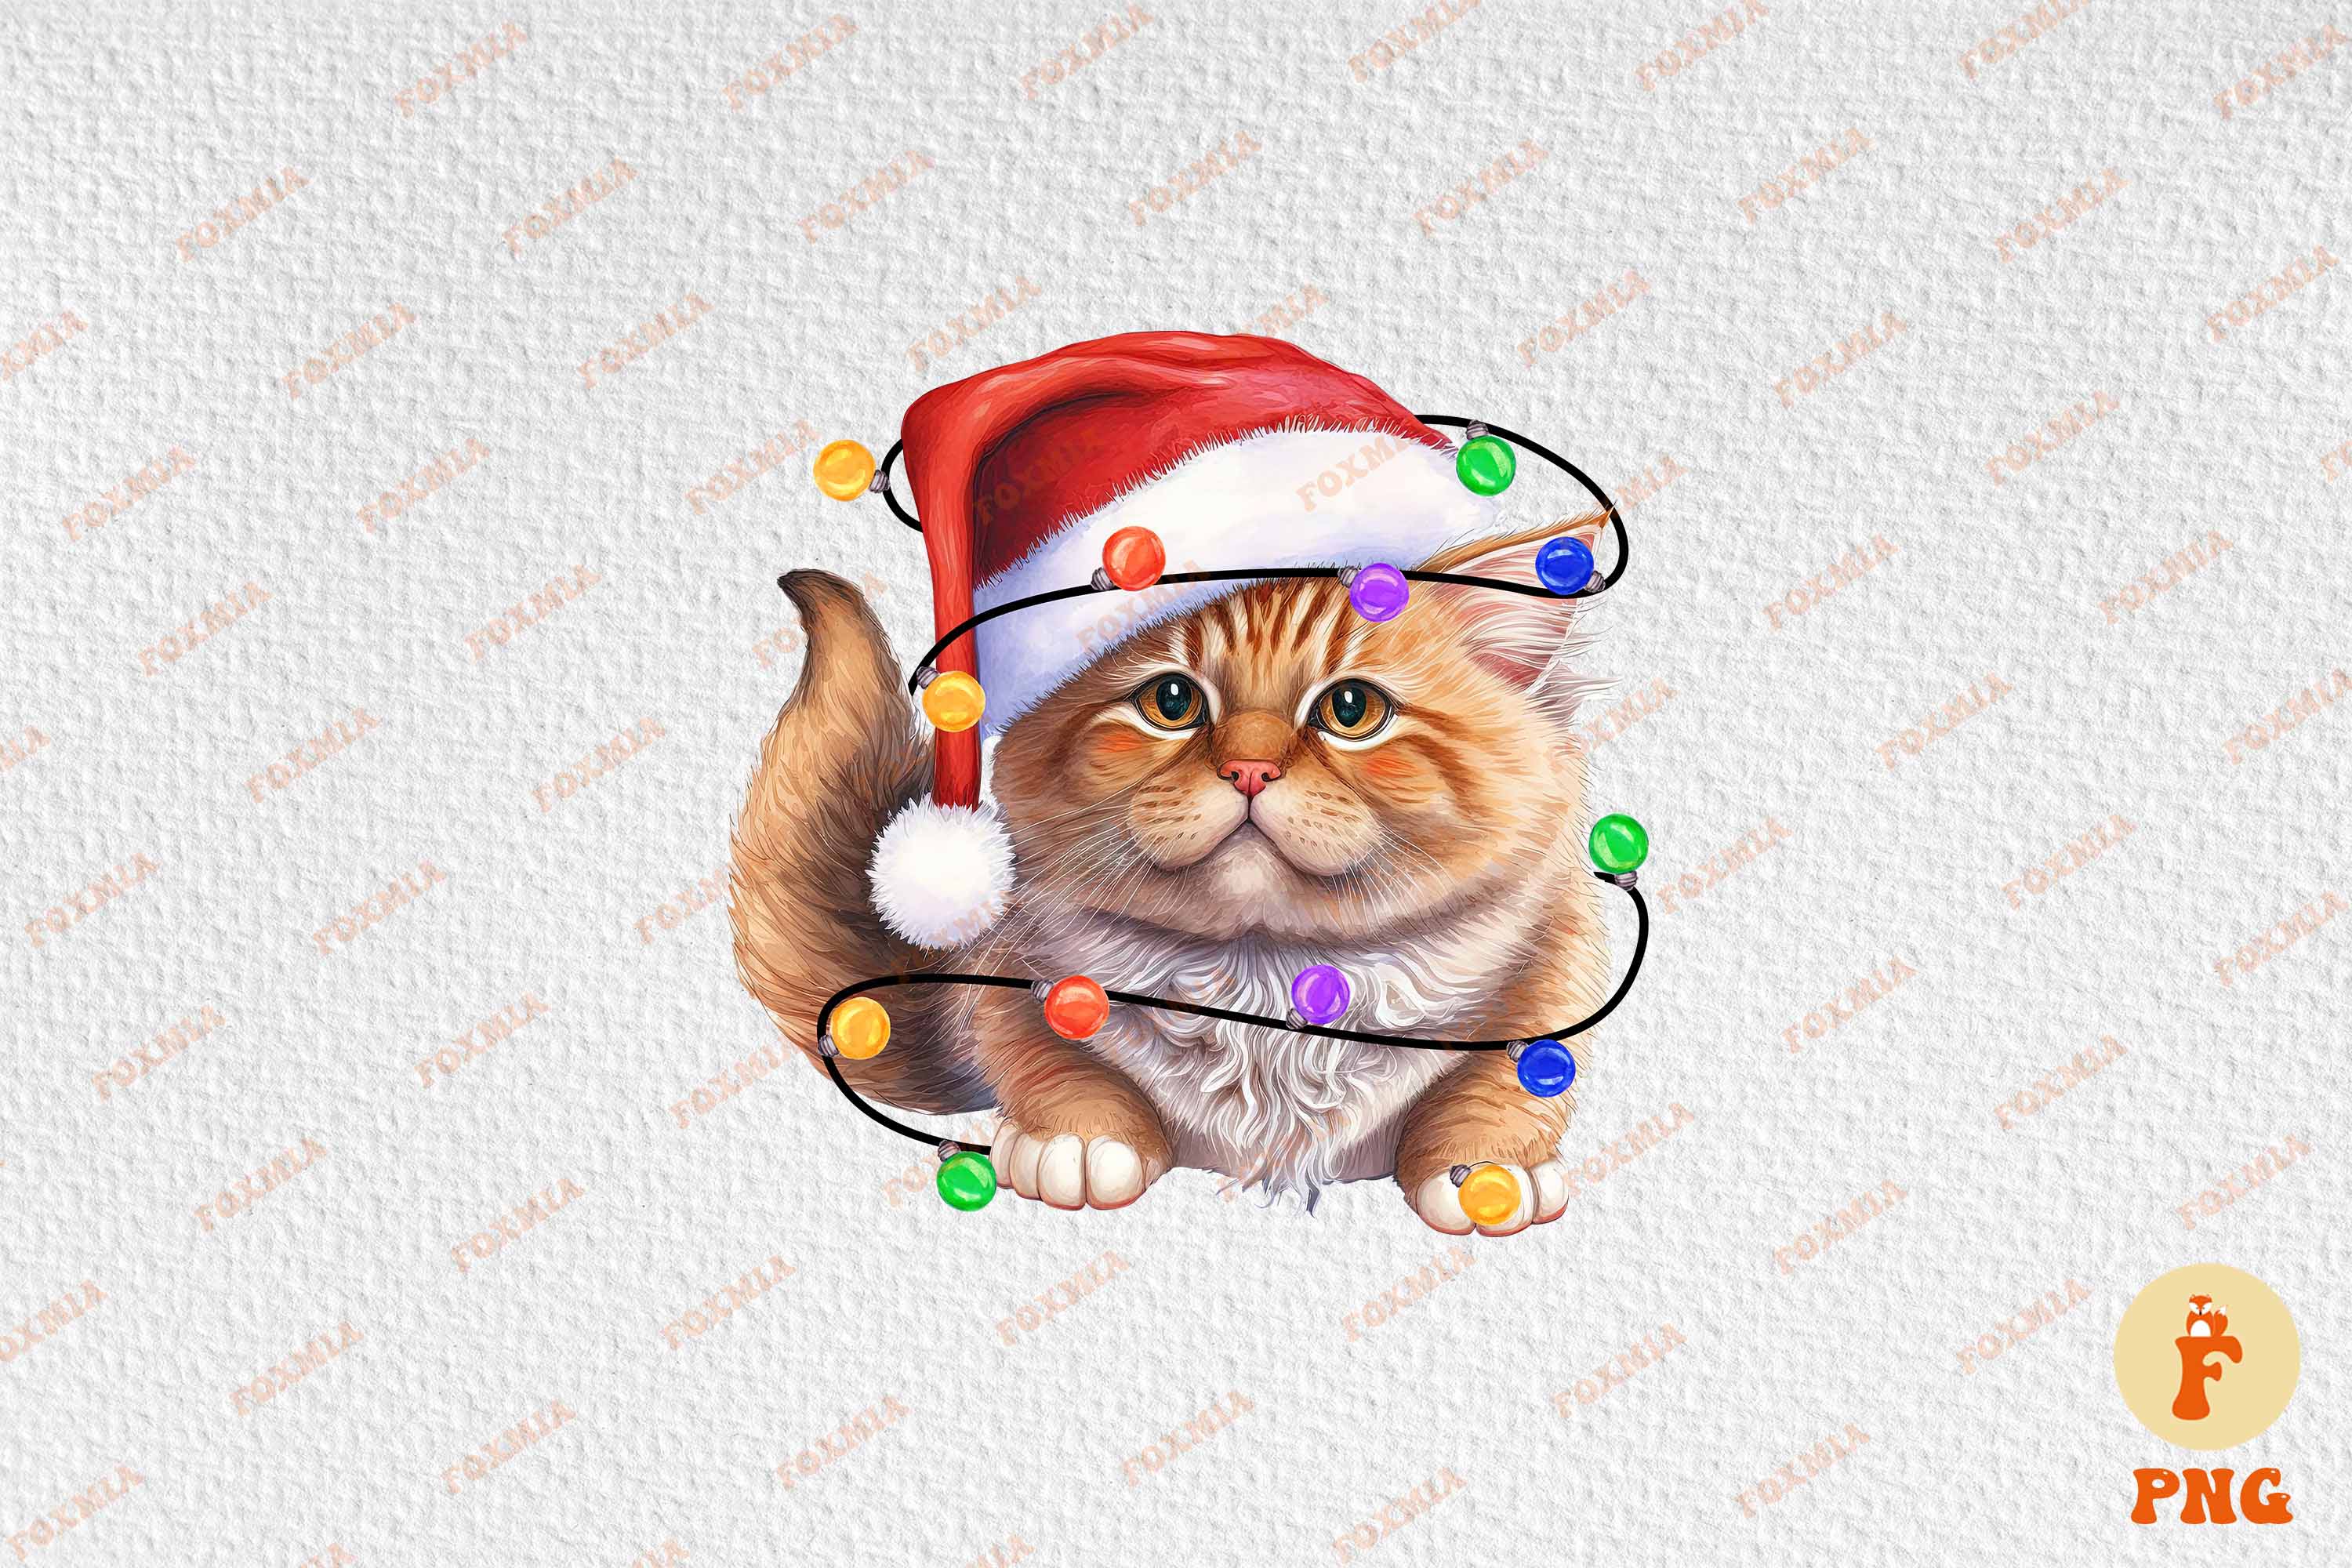 Enchanting image of a cat in a santa hat.